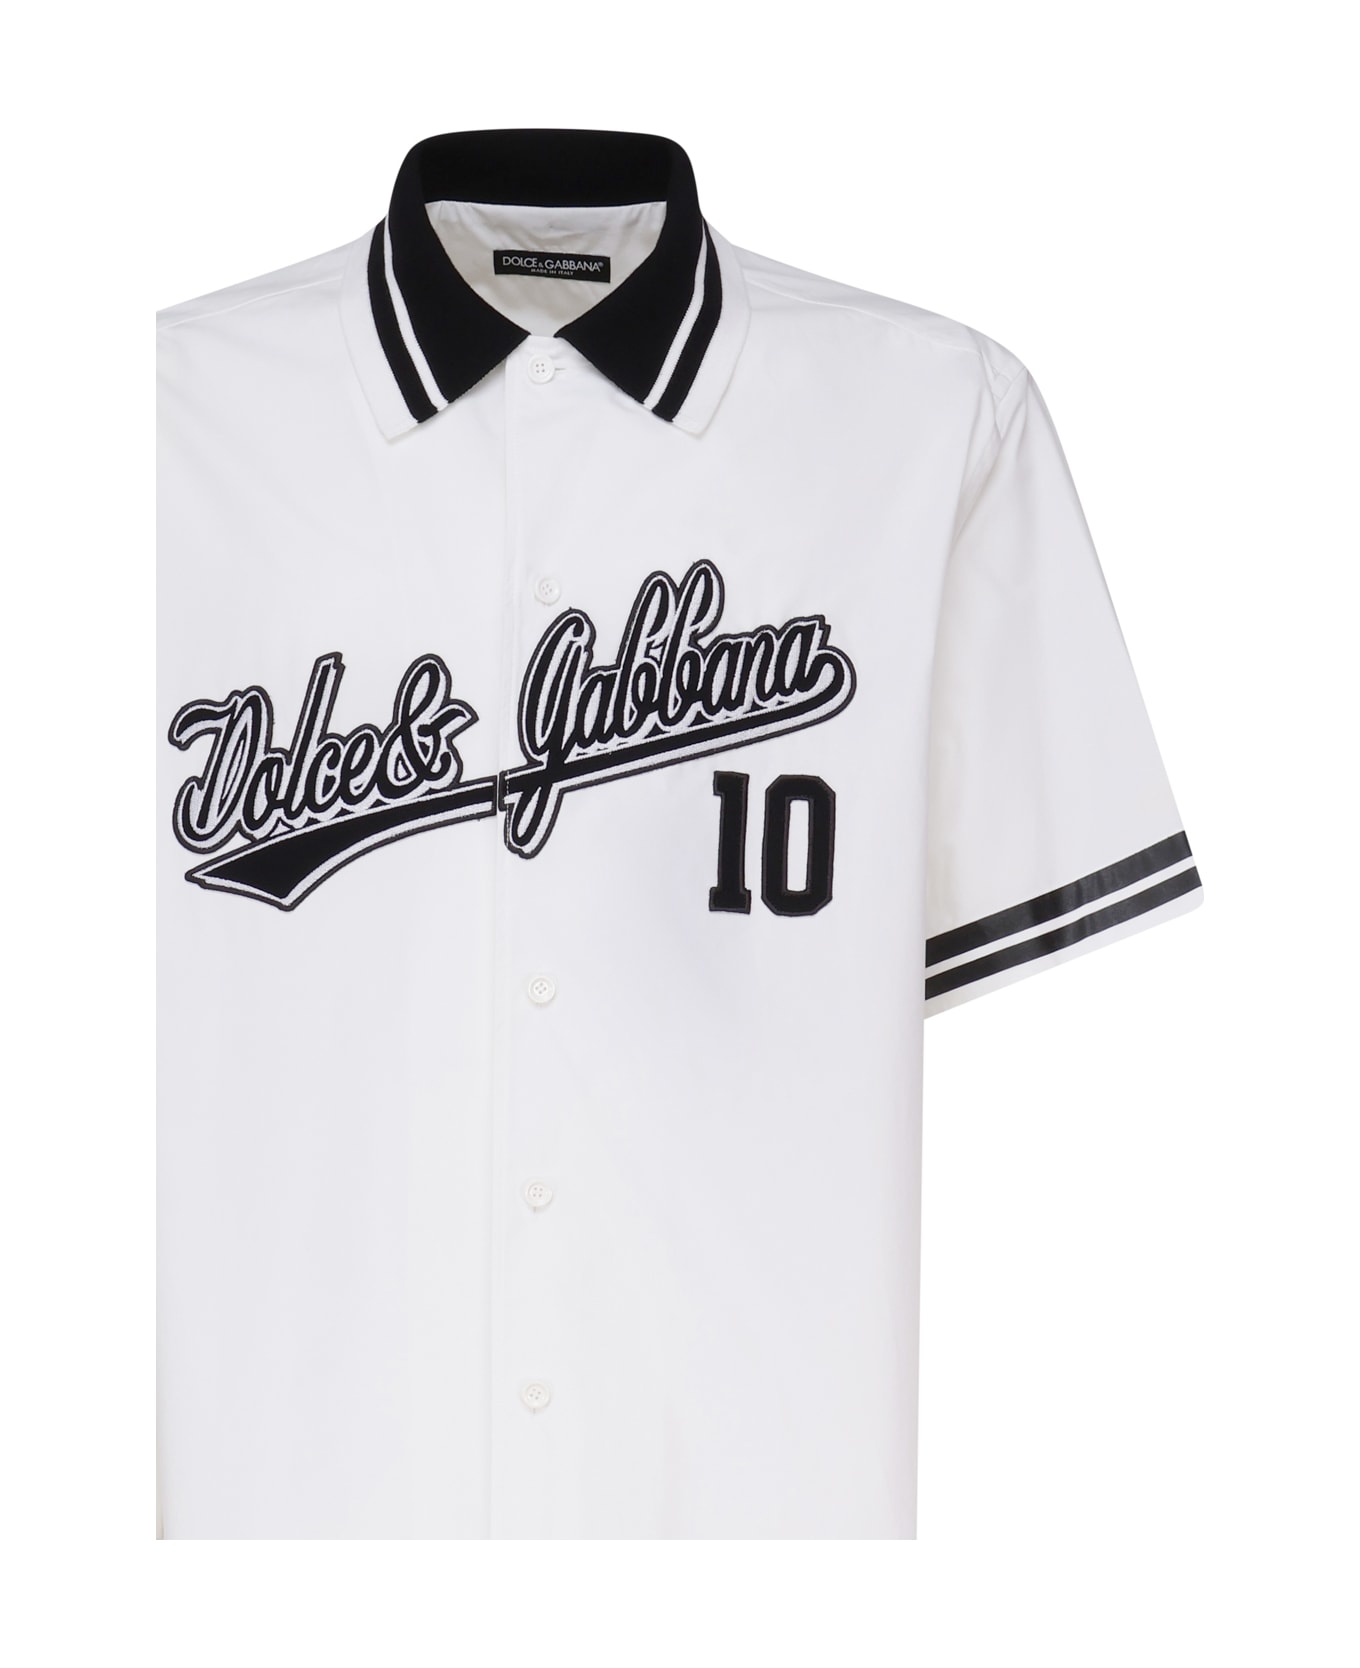 Dolce & Gabbana Logo Printed Hawaiian Shirt - White, black